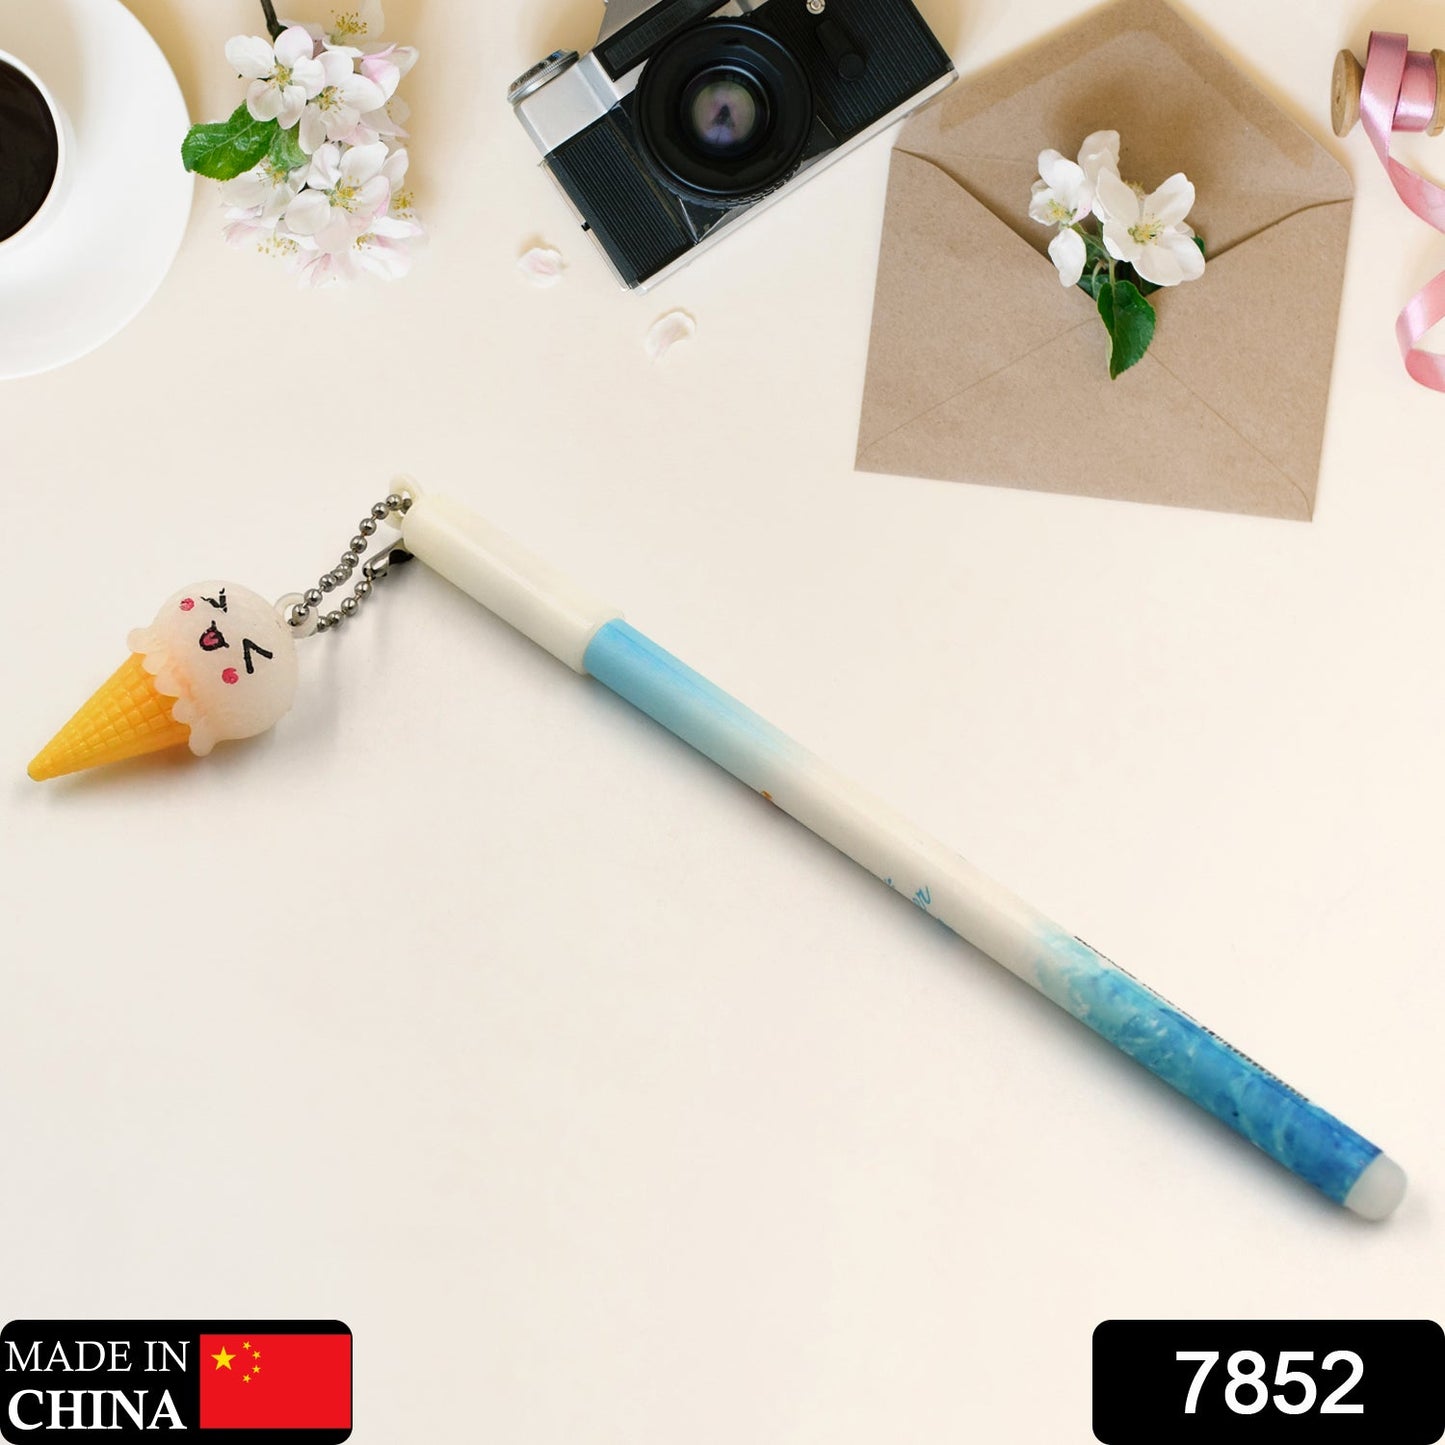 7852 Child Fancy Pen New style Children Ball Pen For School, Office & Children Fun Use